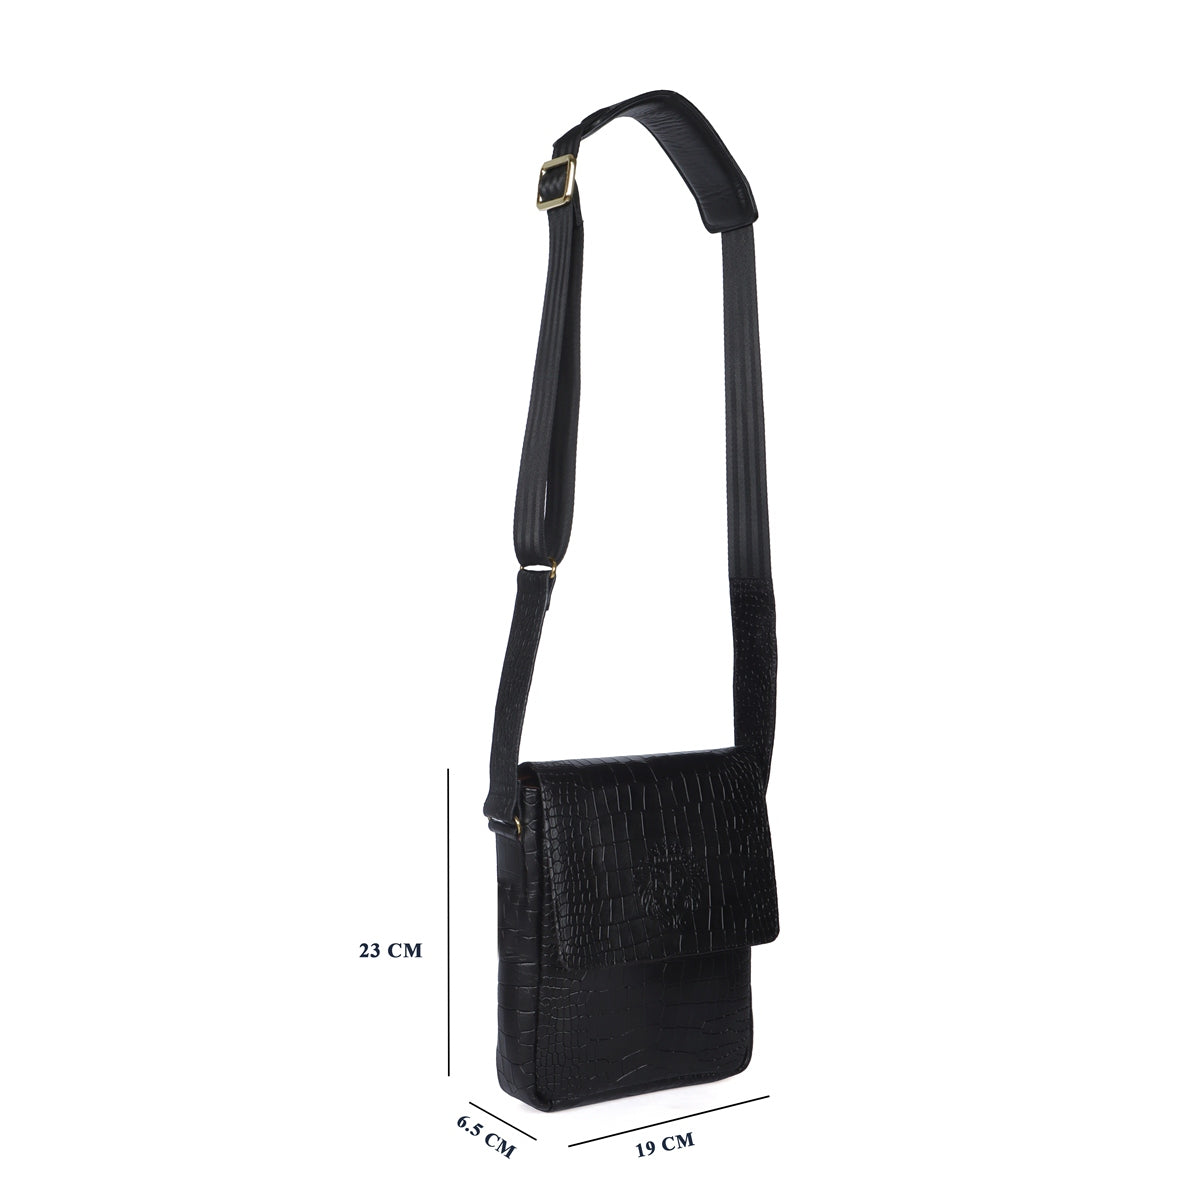 Flap Over Button-Zip Closure Metal Lion Dark Brown Cross-Body Leather Bag Adjustable Shoulder Strap